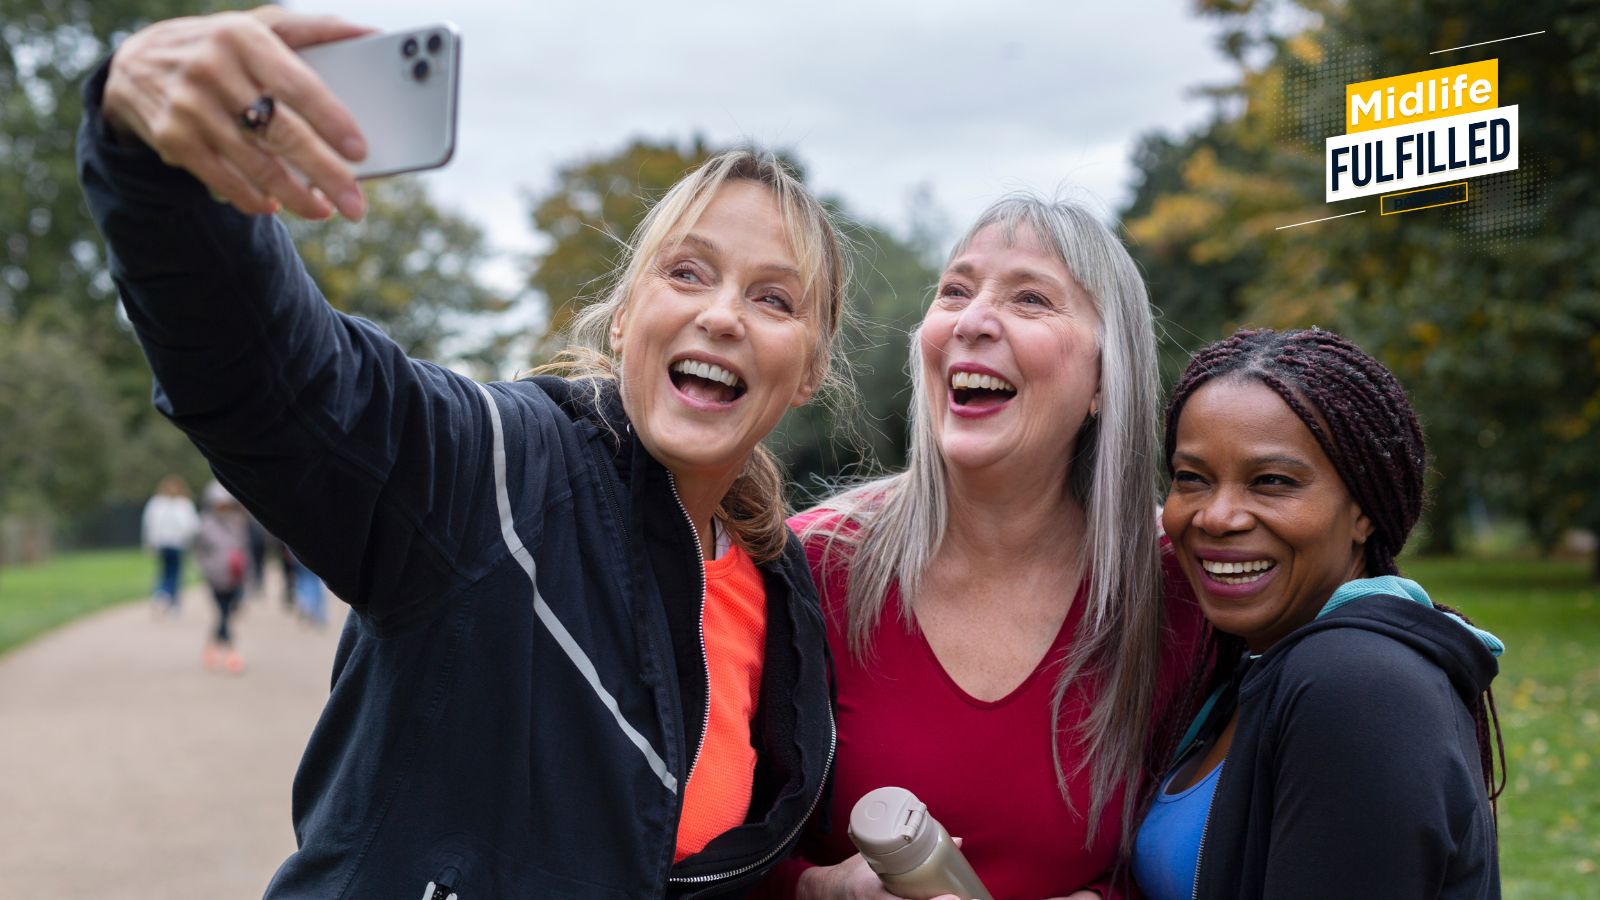 Midlife women taking selfie | Michelle Brigman | Midlife Fulfilled Blog